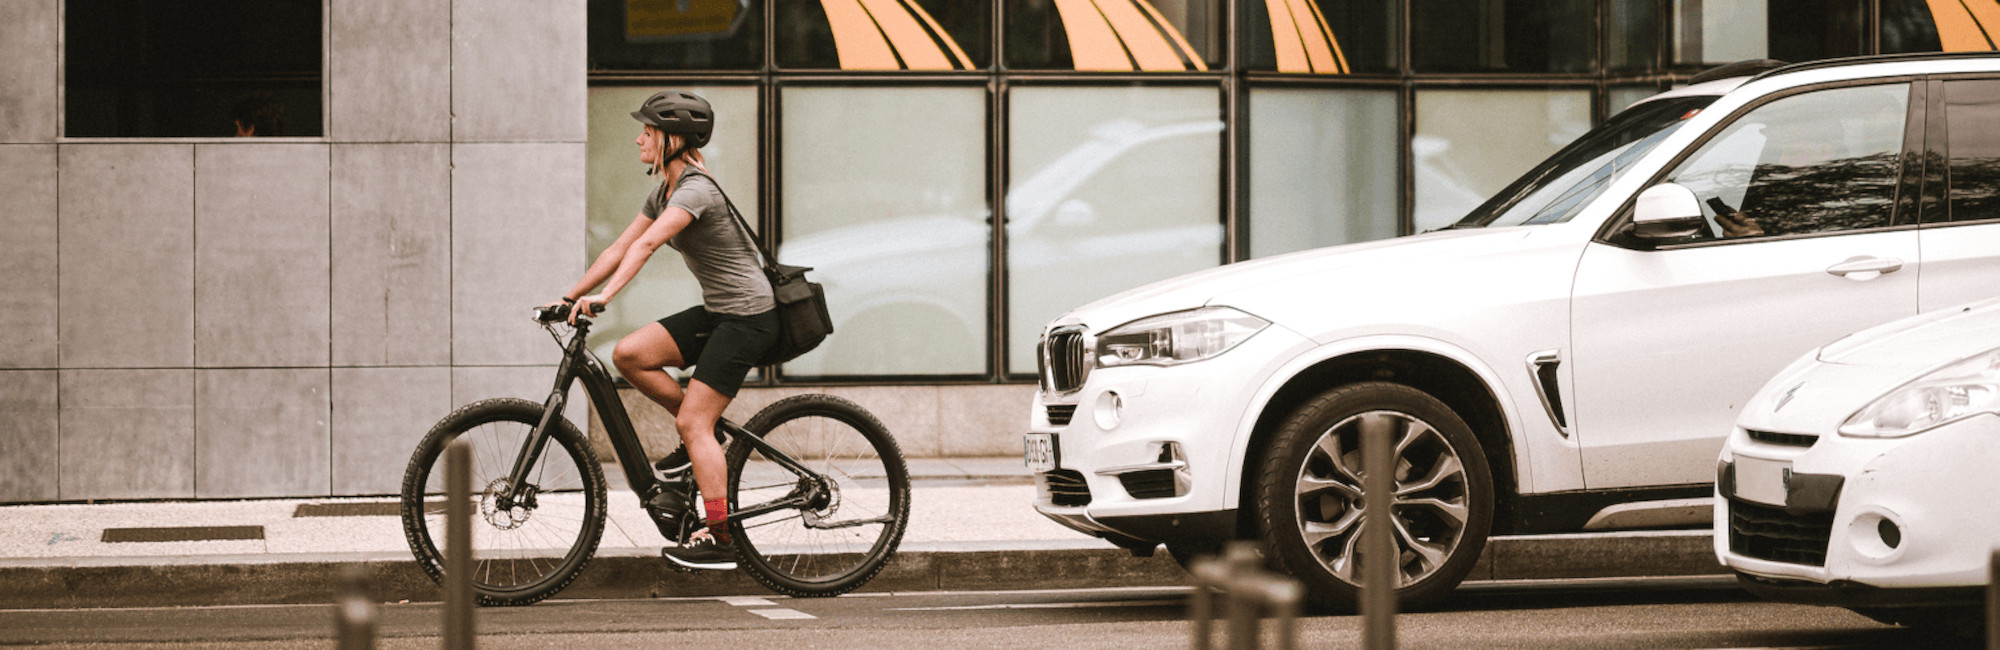 Kan du bytte bilen mot en el-sykkel